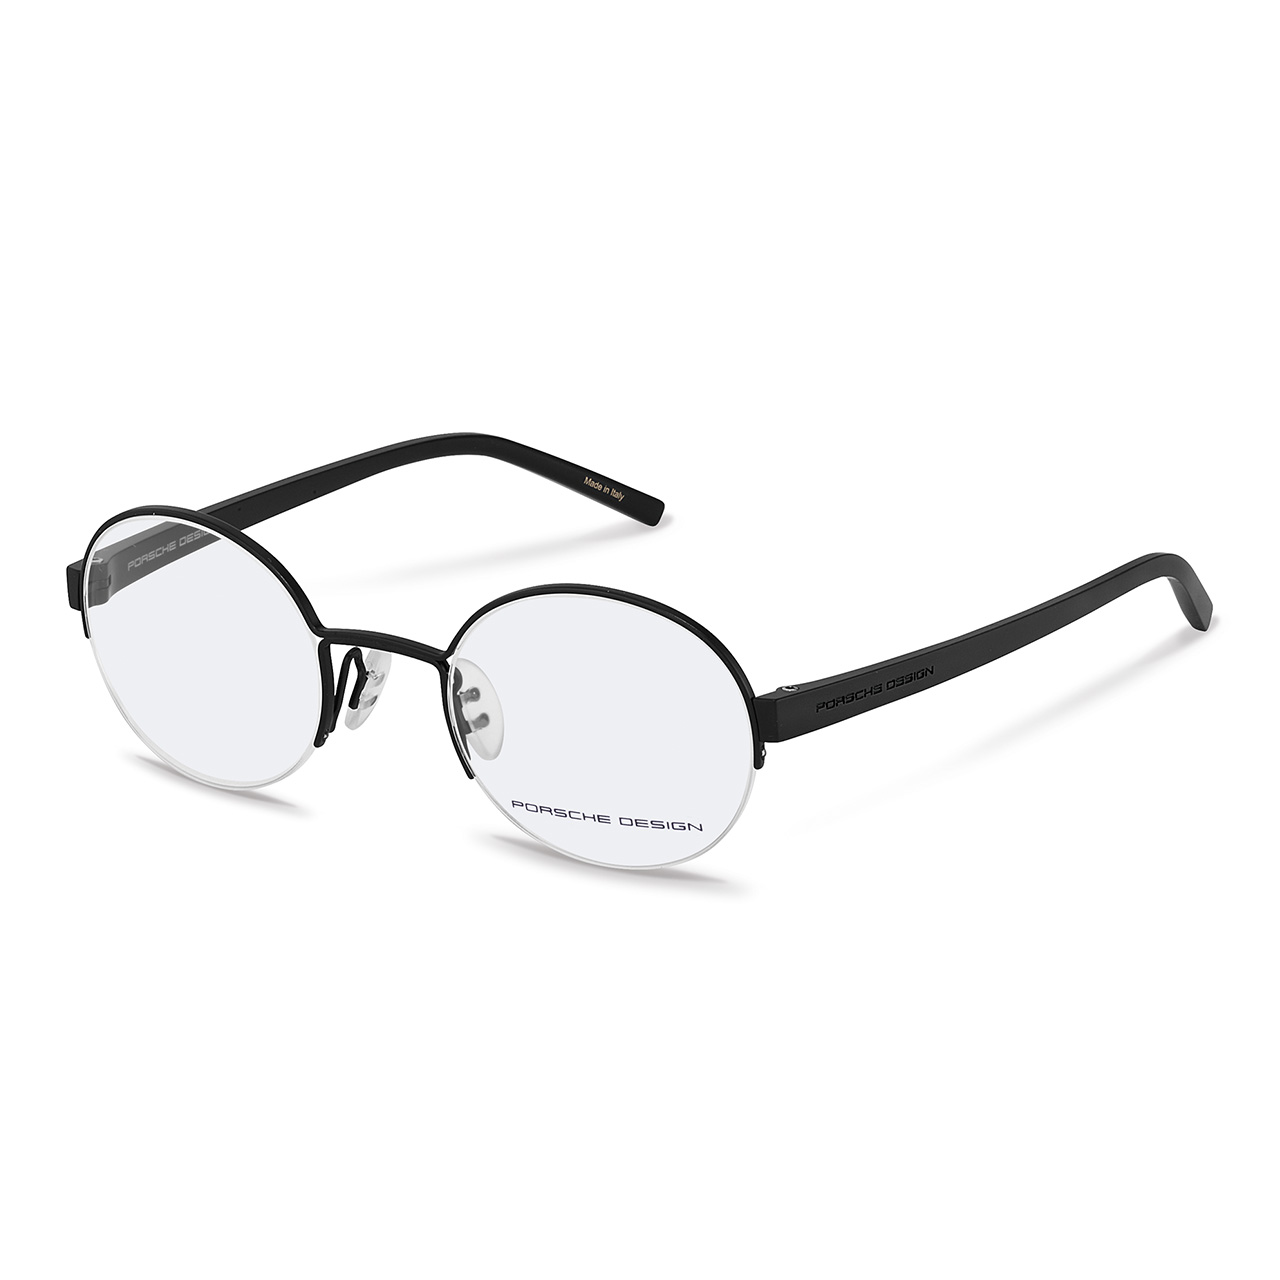 Correction Frames P´8350 - Metal-Frame Glasses - Classic Prescription ...